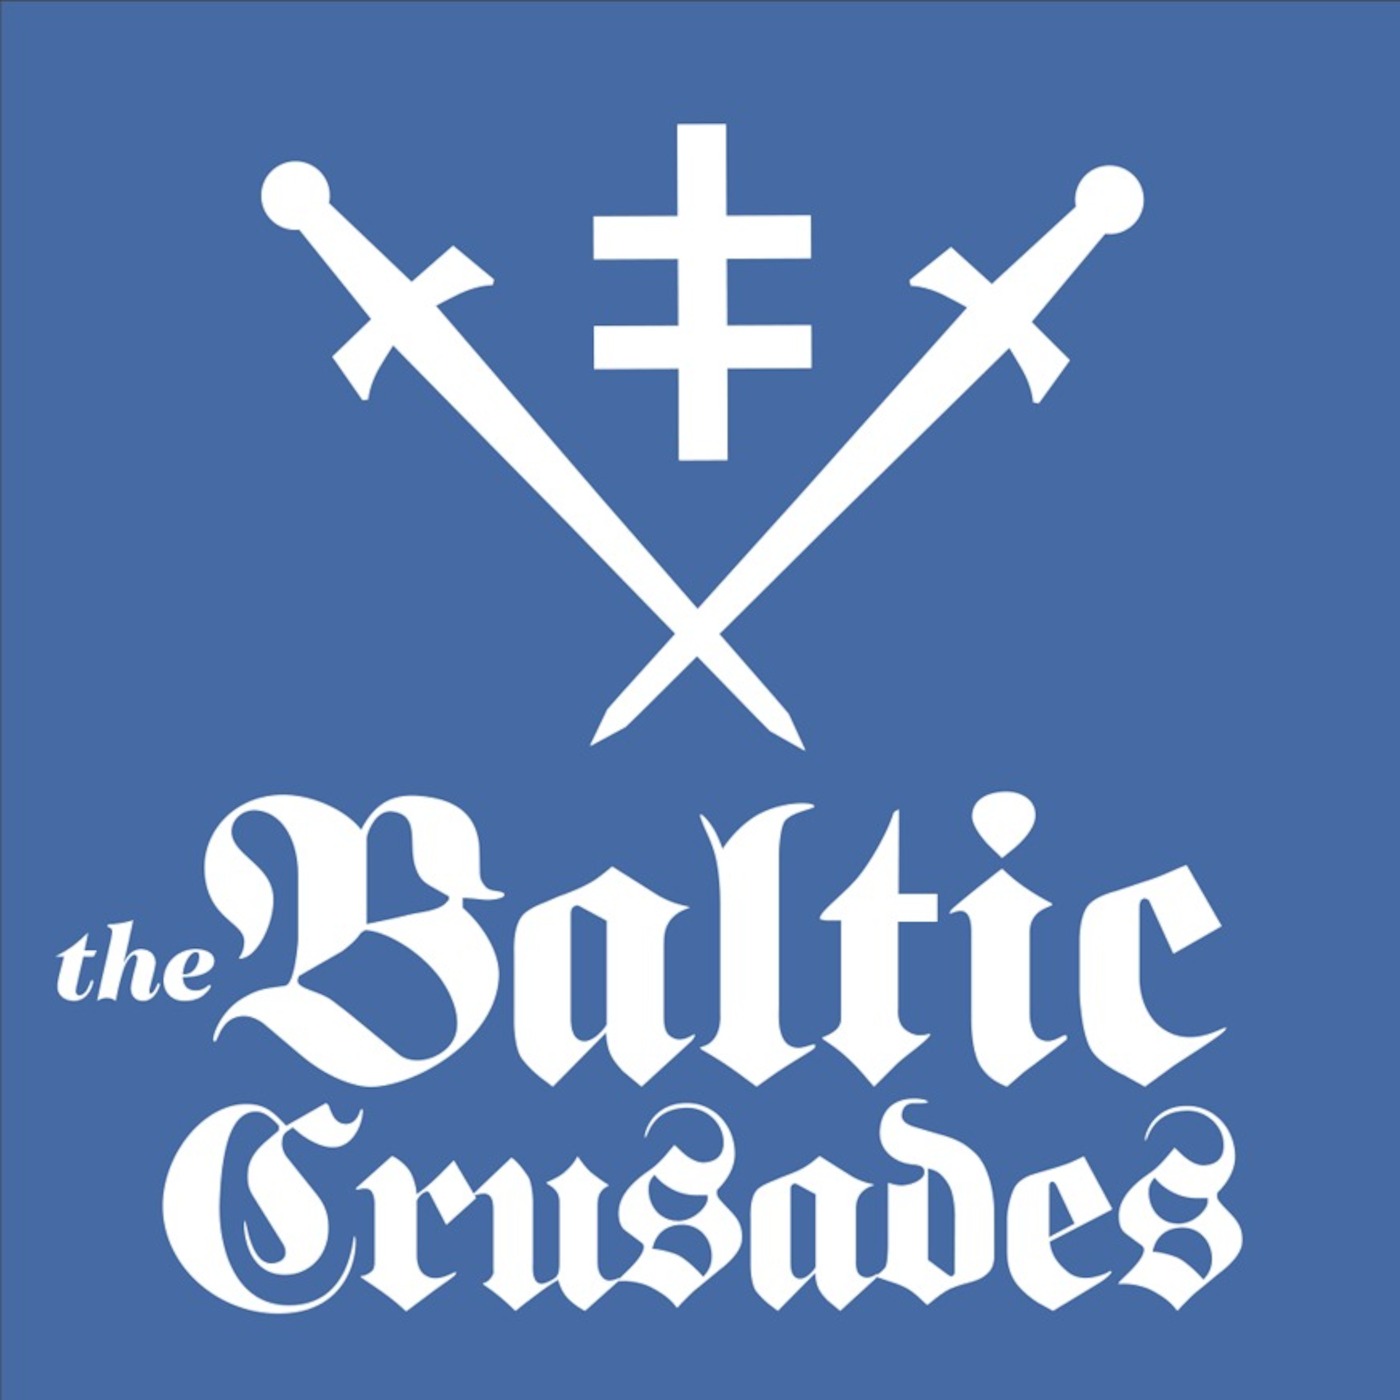 Episode 233 - The Baltic Crusades